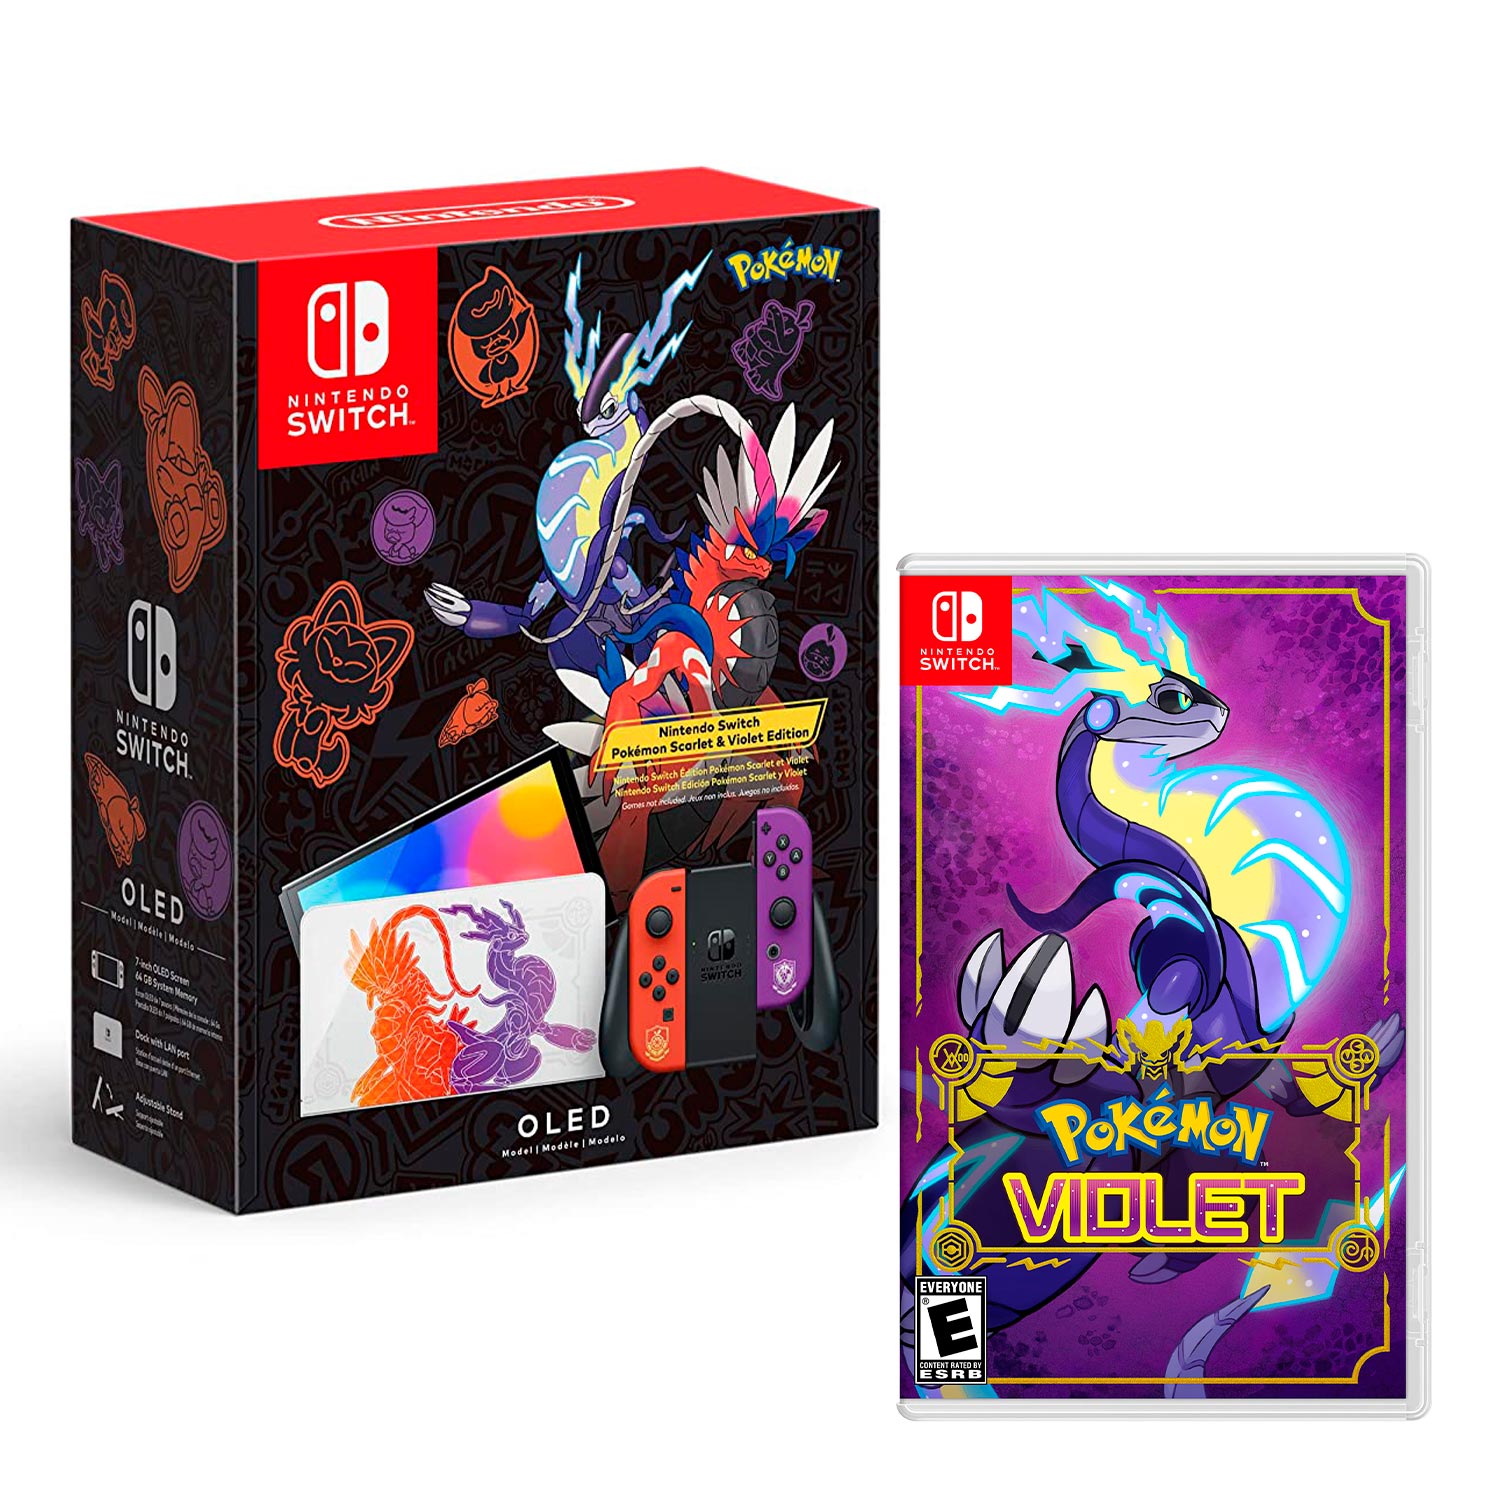 Consola Nintendo Switch Oled Edicion Scarlet & Violet + Pokemon Violet